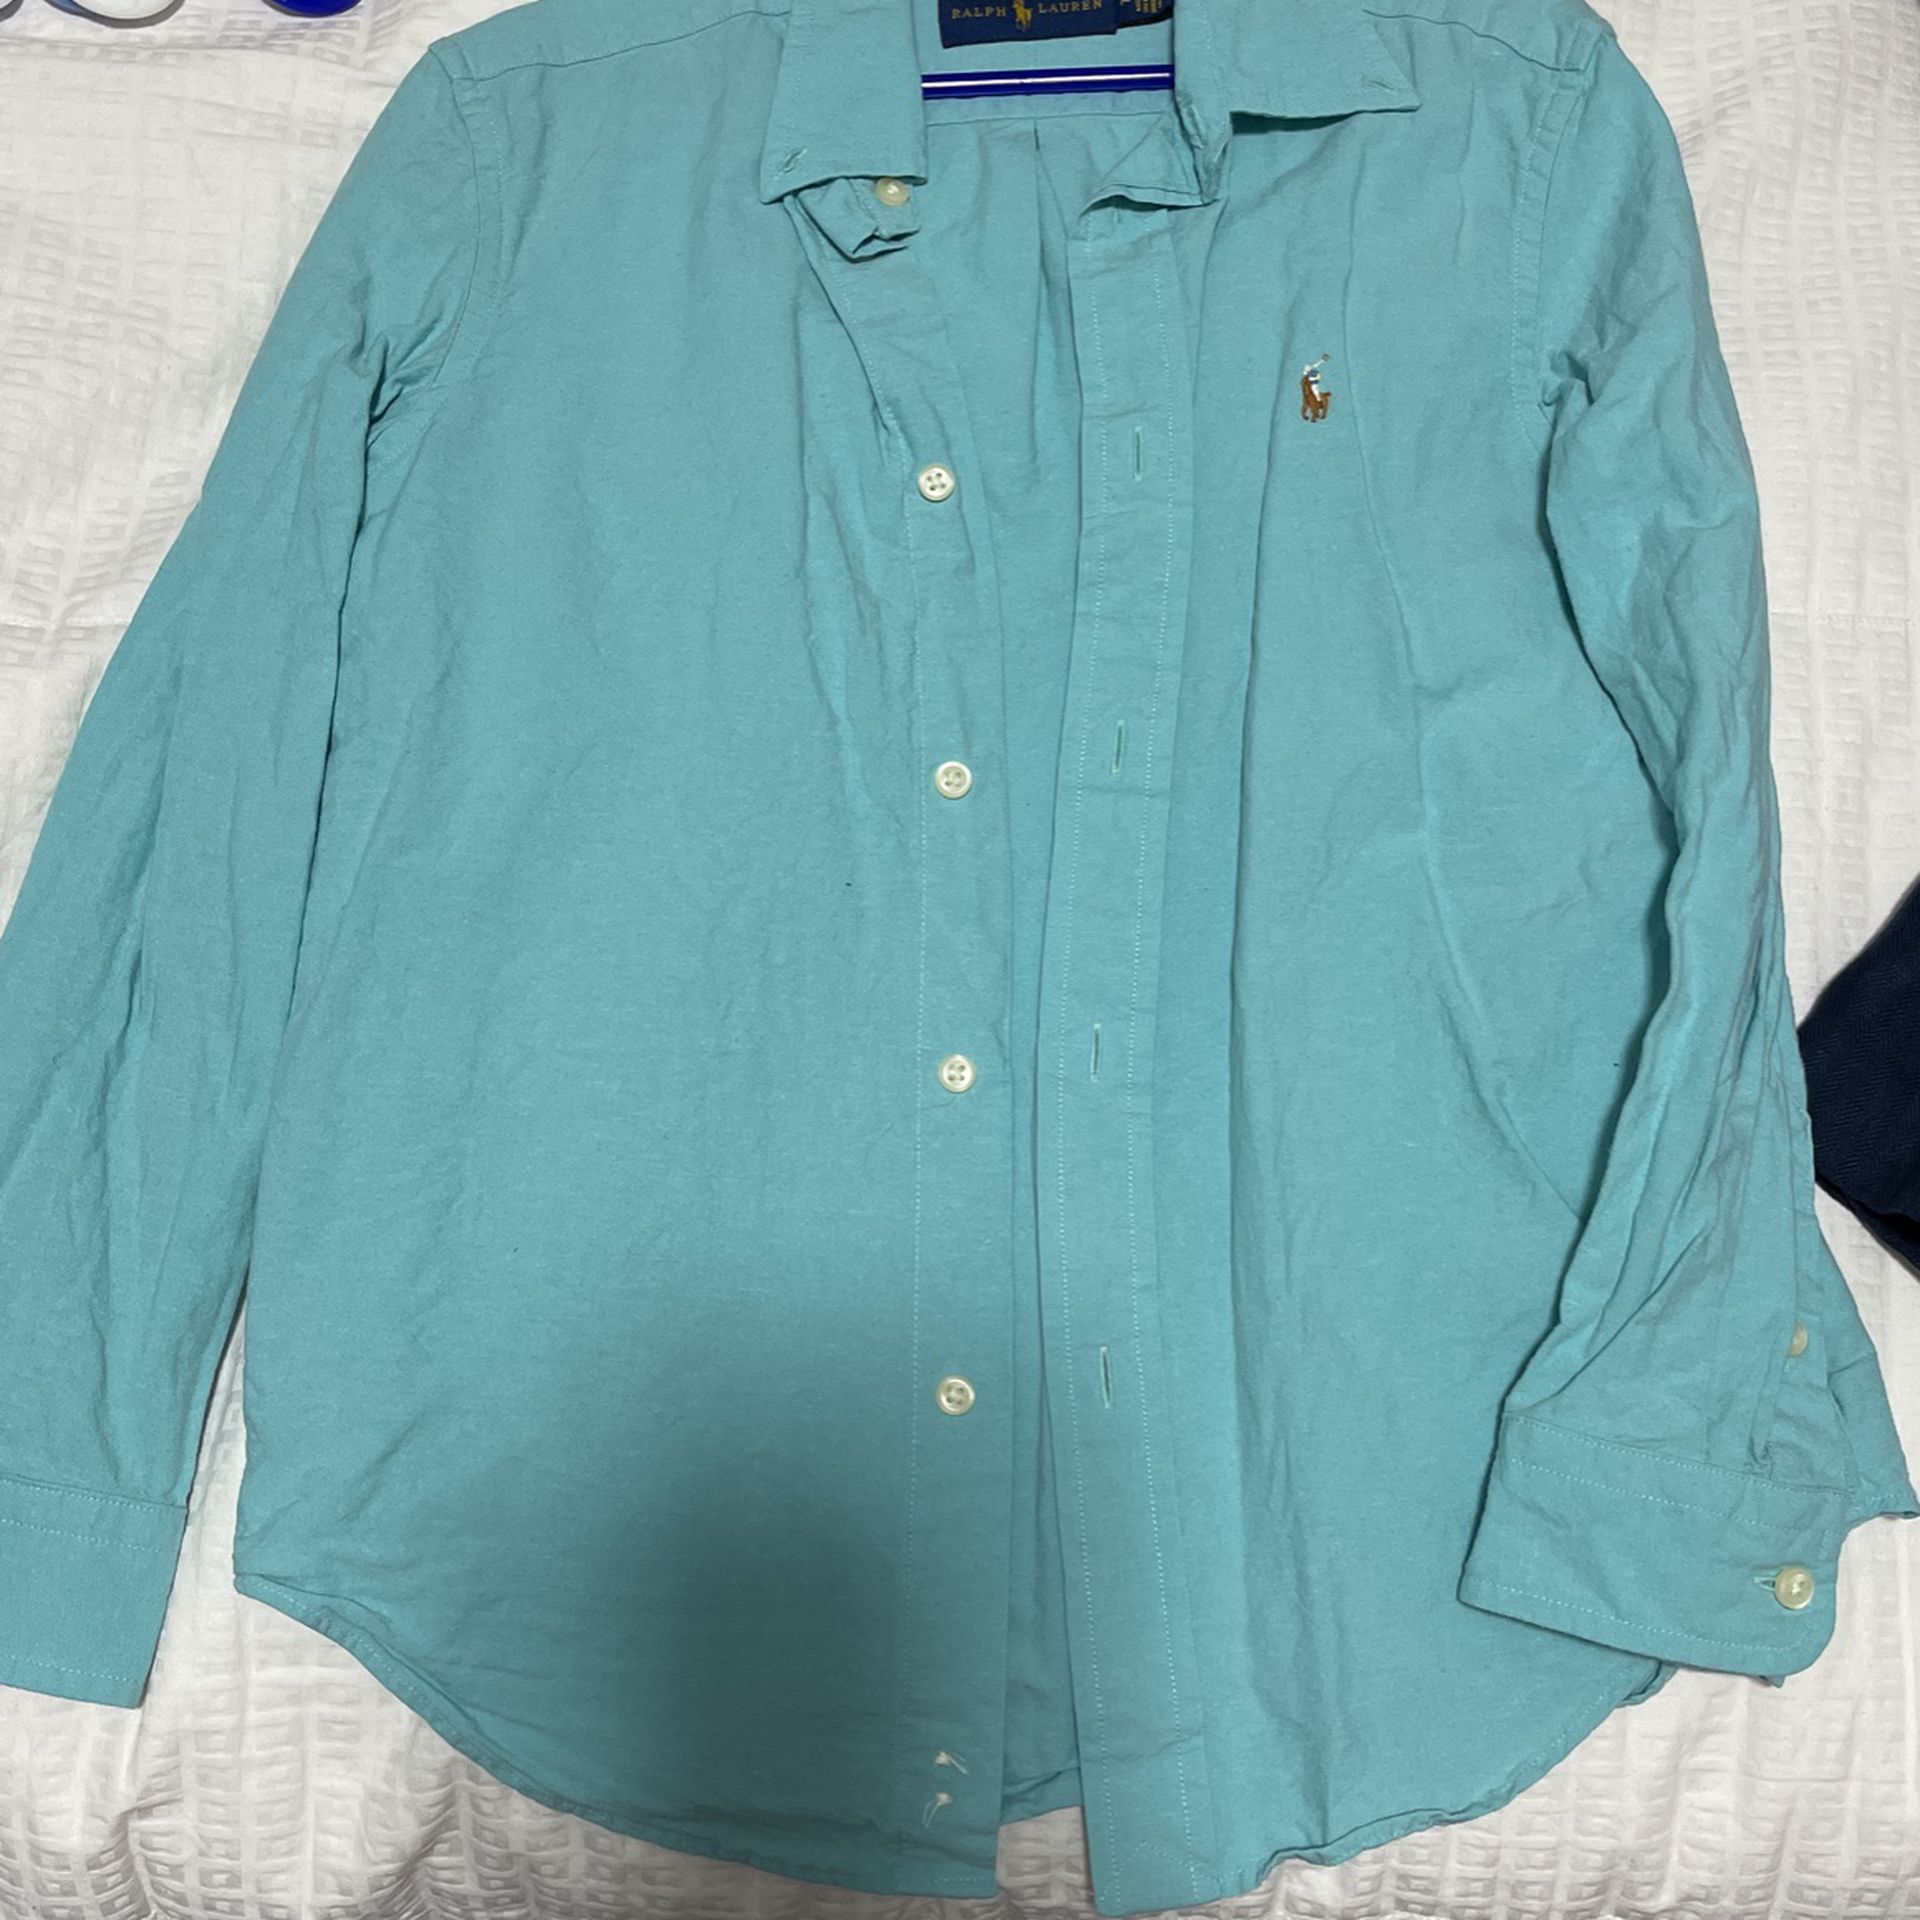 Polo Ralph Lauren Shirts Size 8 $5